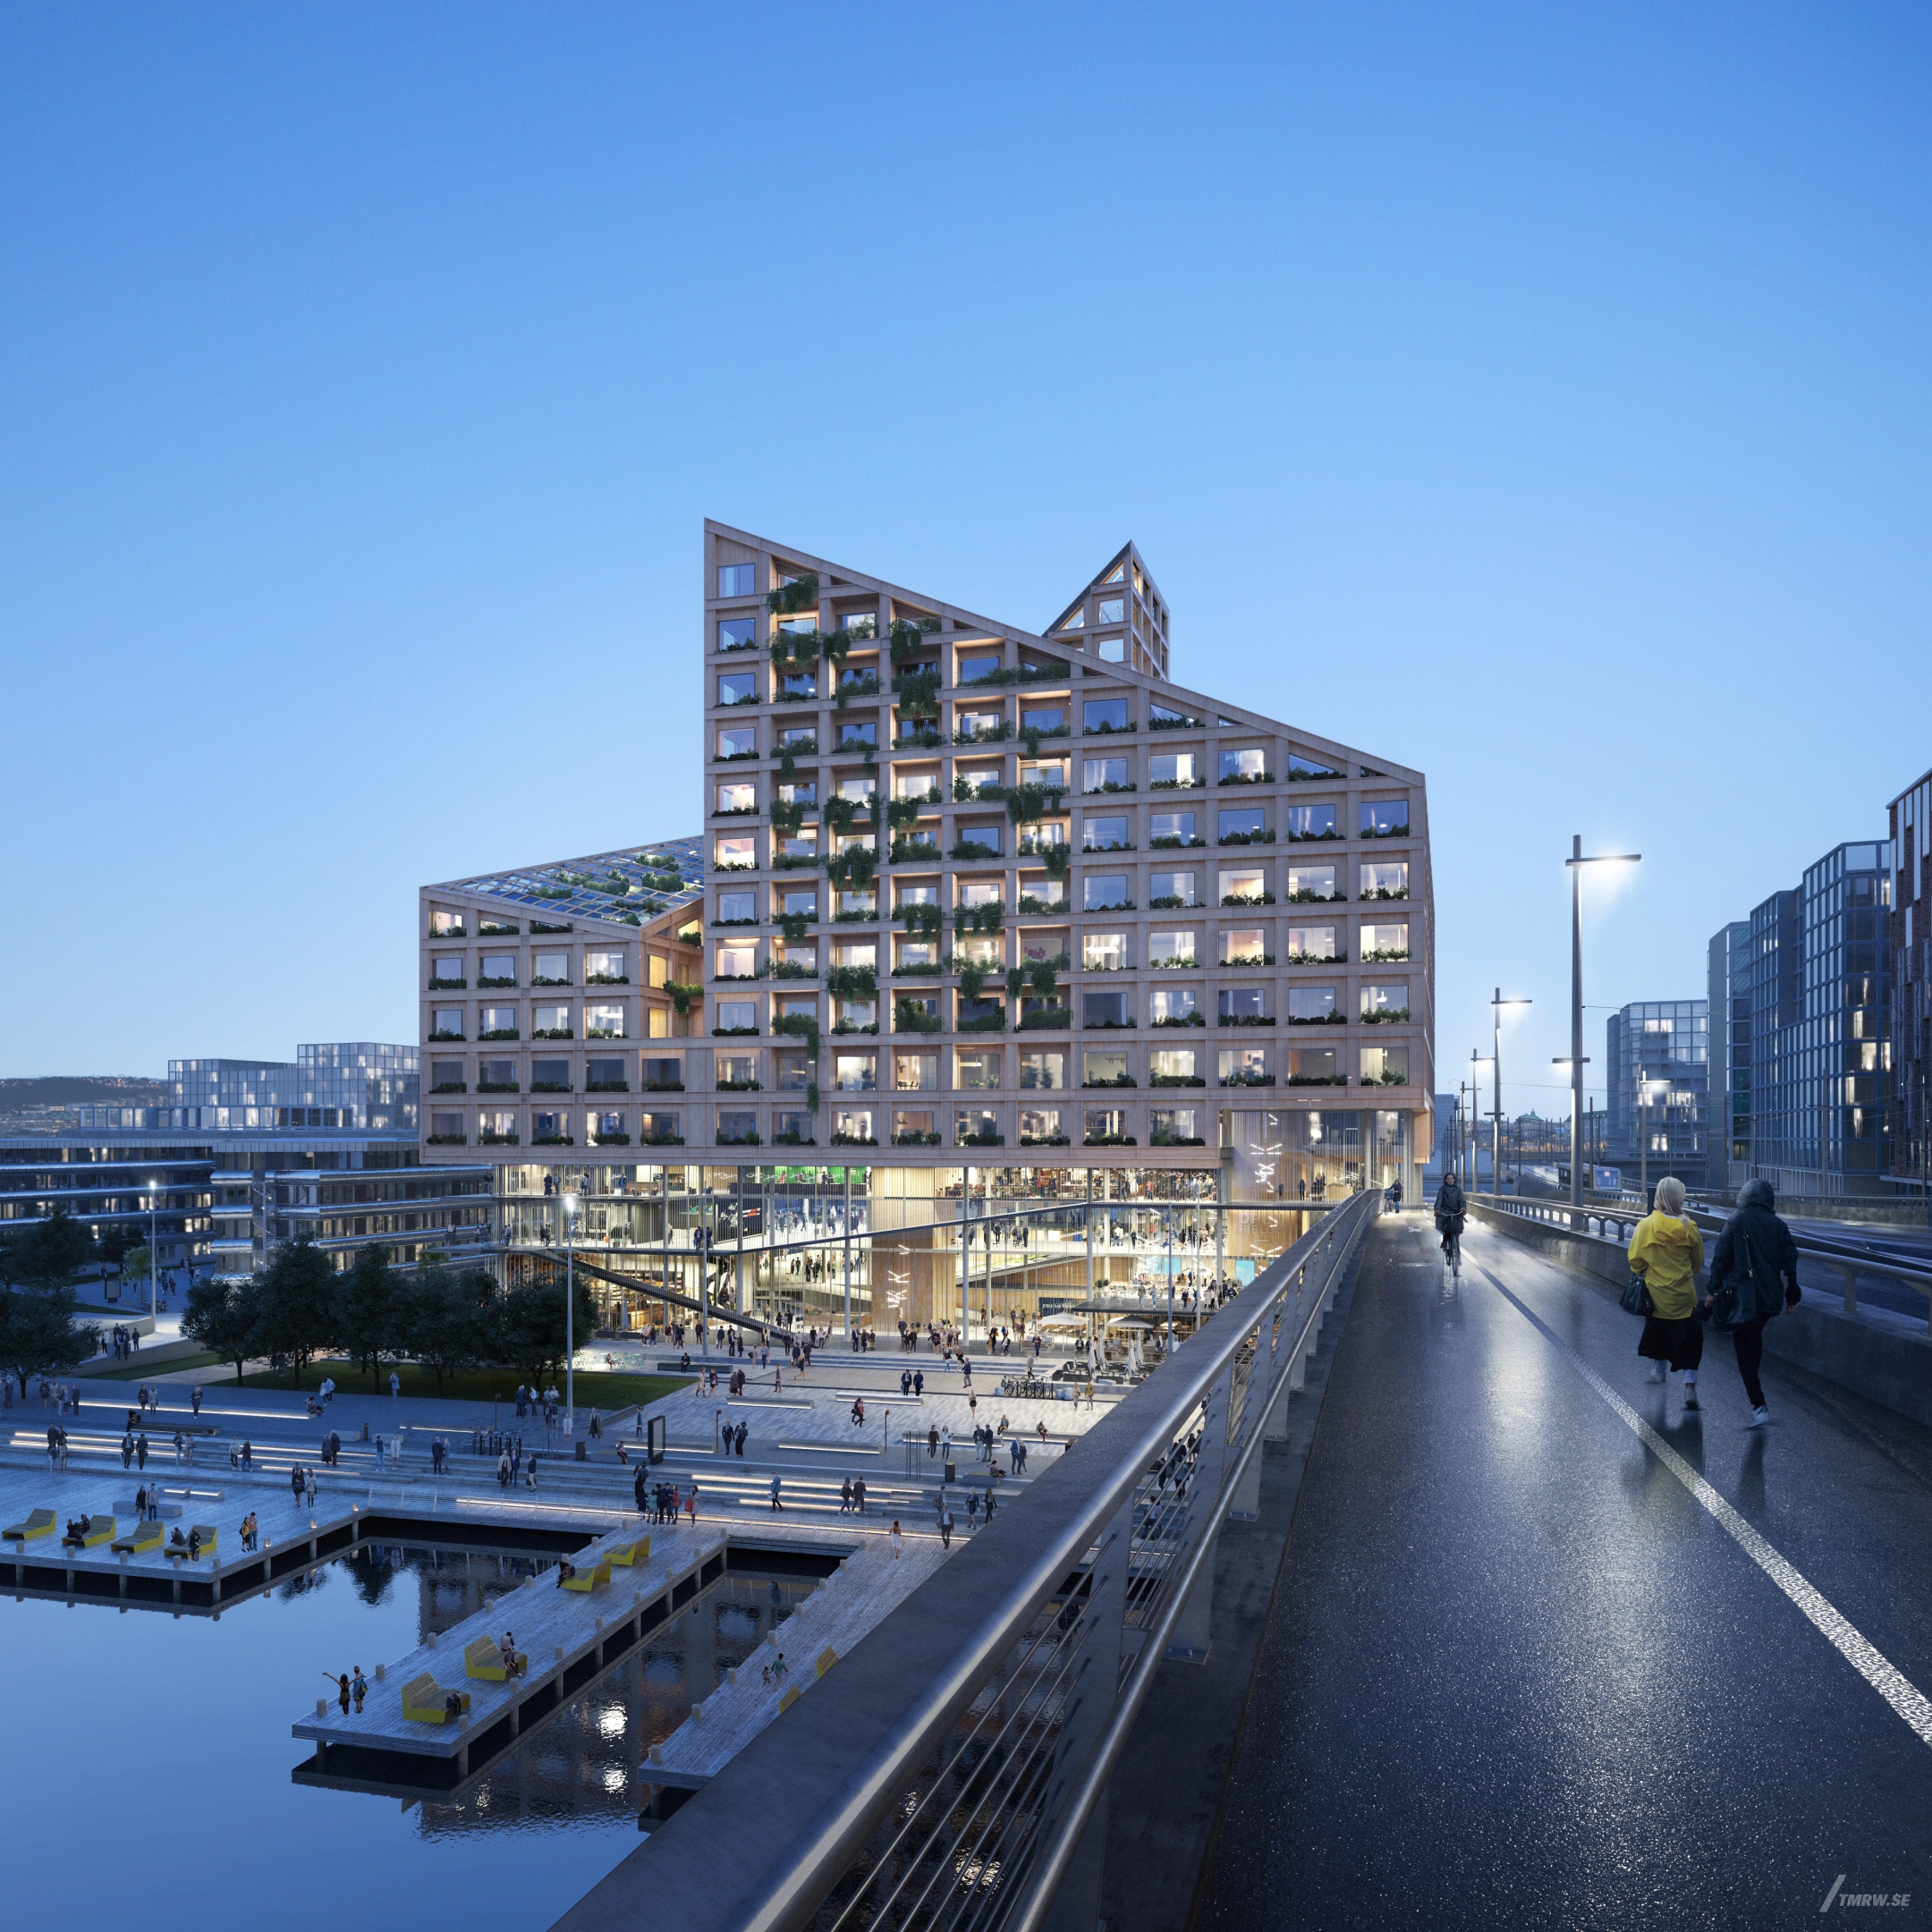 Architectural visualization of Kaj 16 for Dorte Mandrup an office building by a bridge in blue hour light.